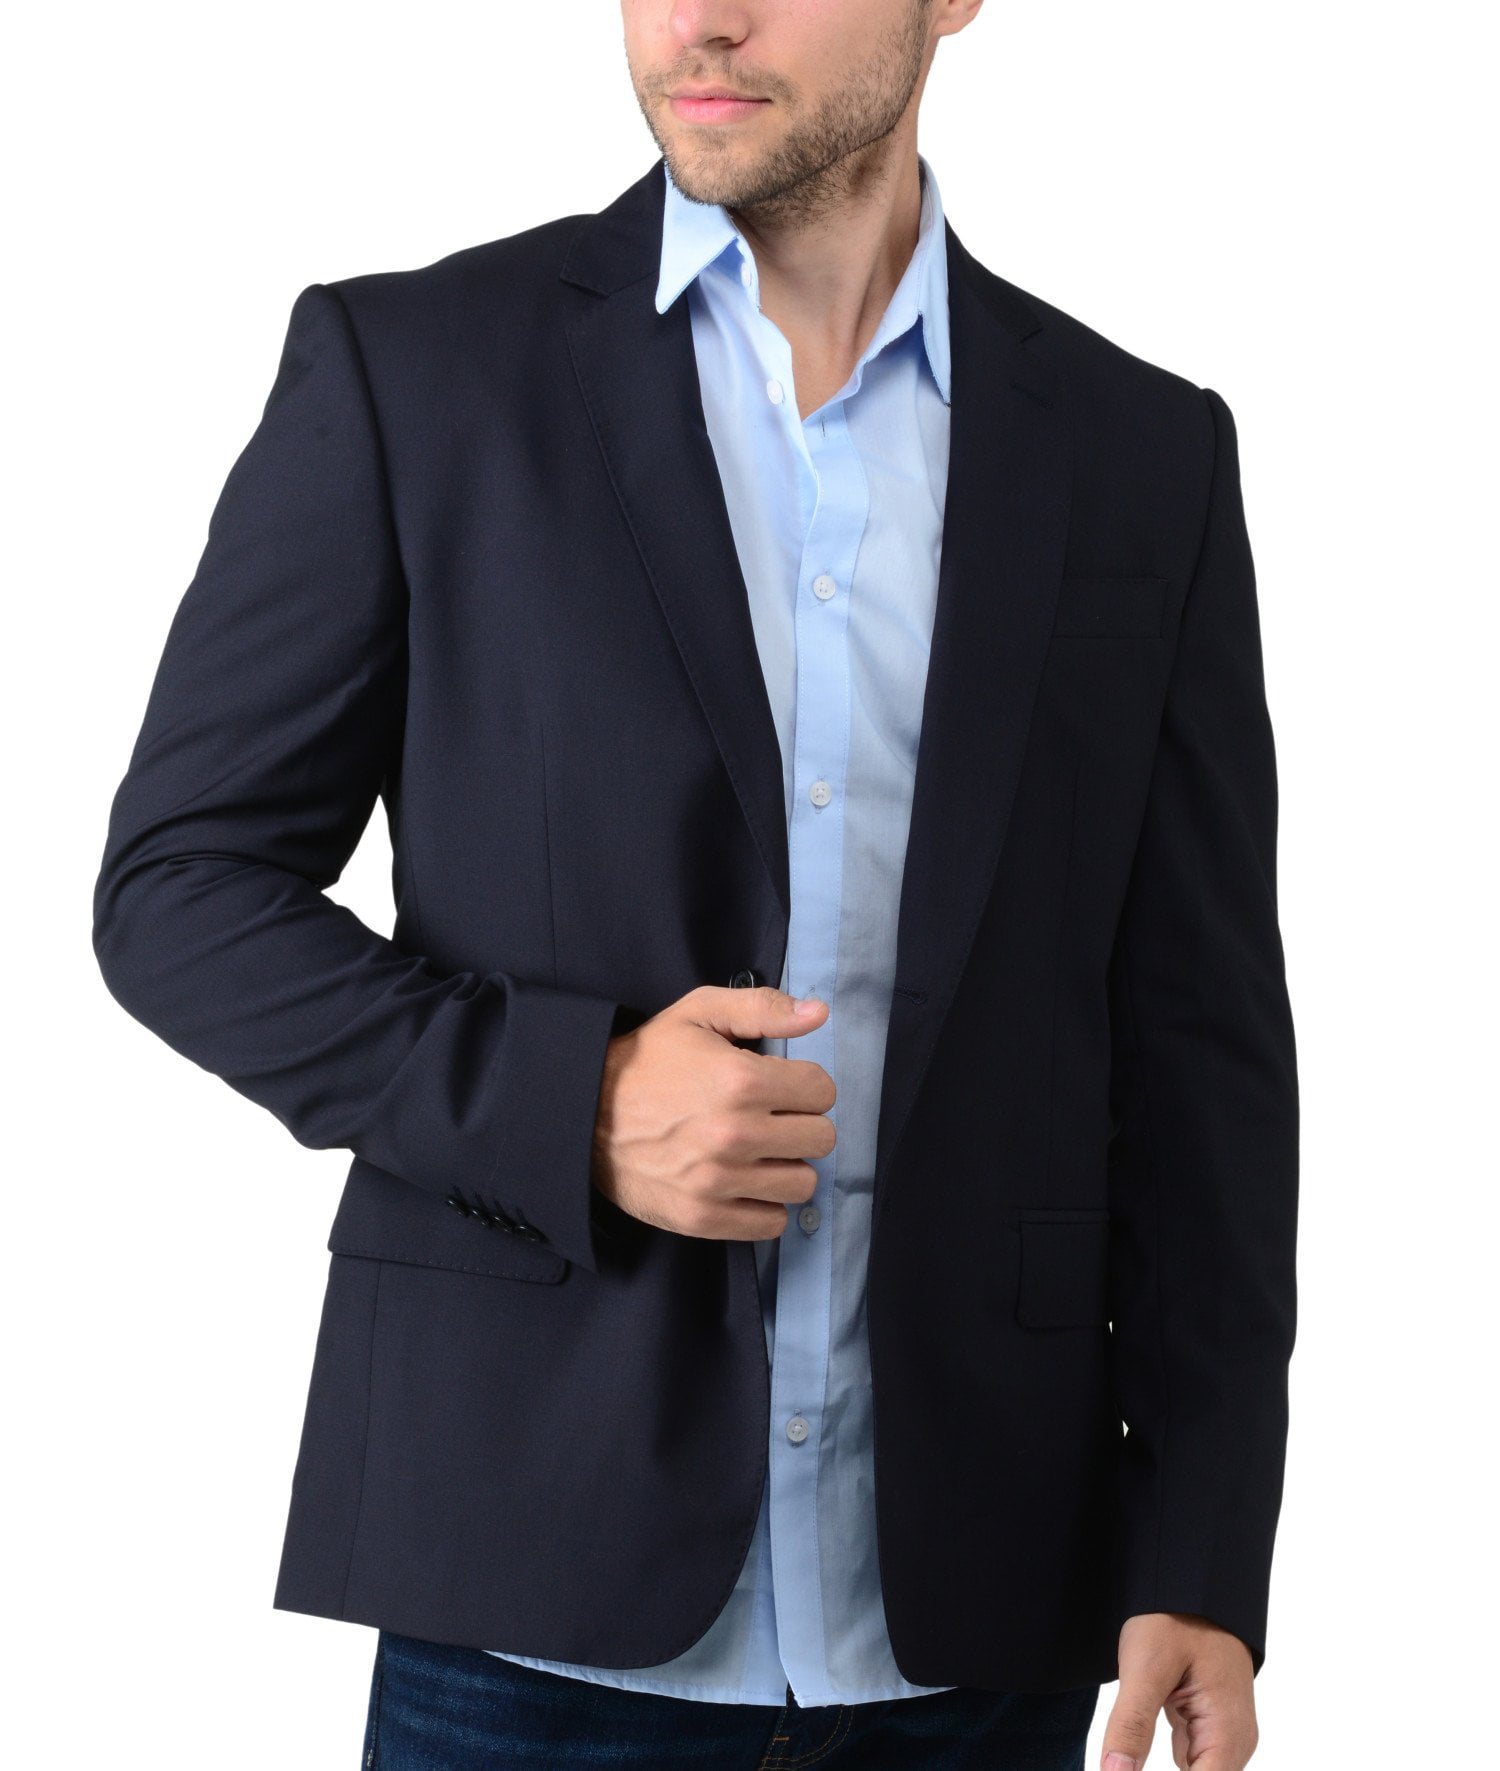 Roberto Cavalli Giacca Slim Fit Suit Jacket for Men - 48 US / 58 EU ...